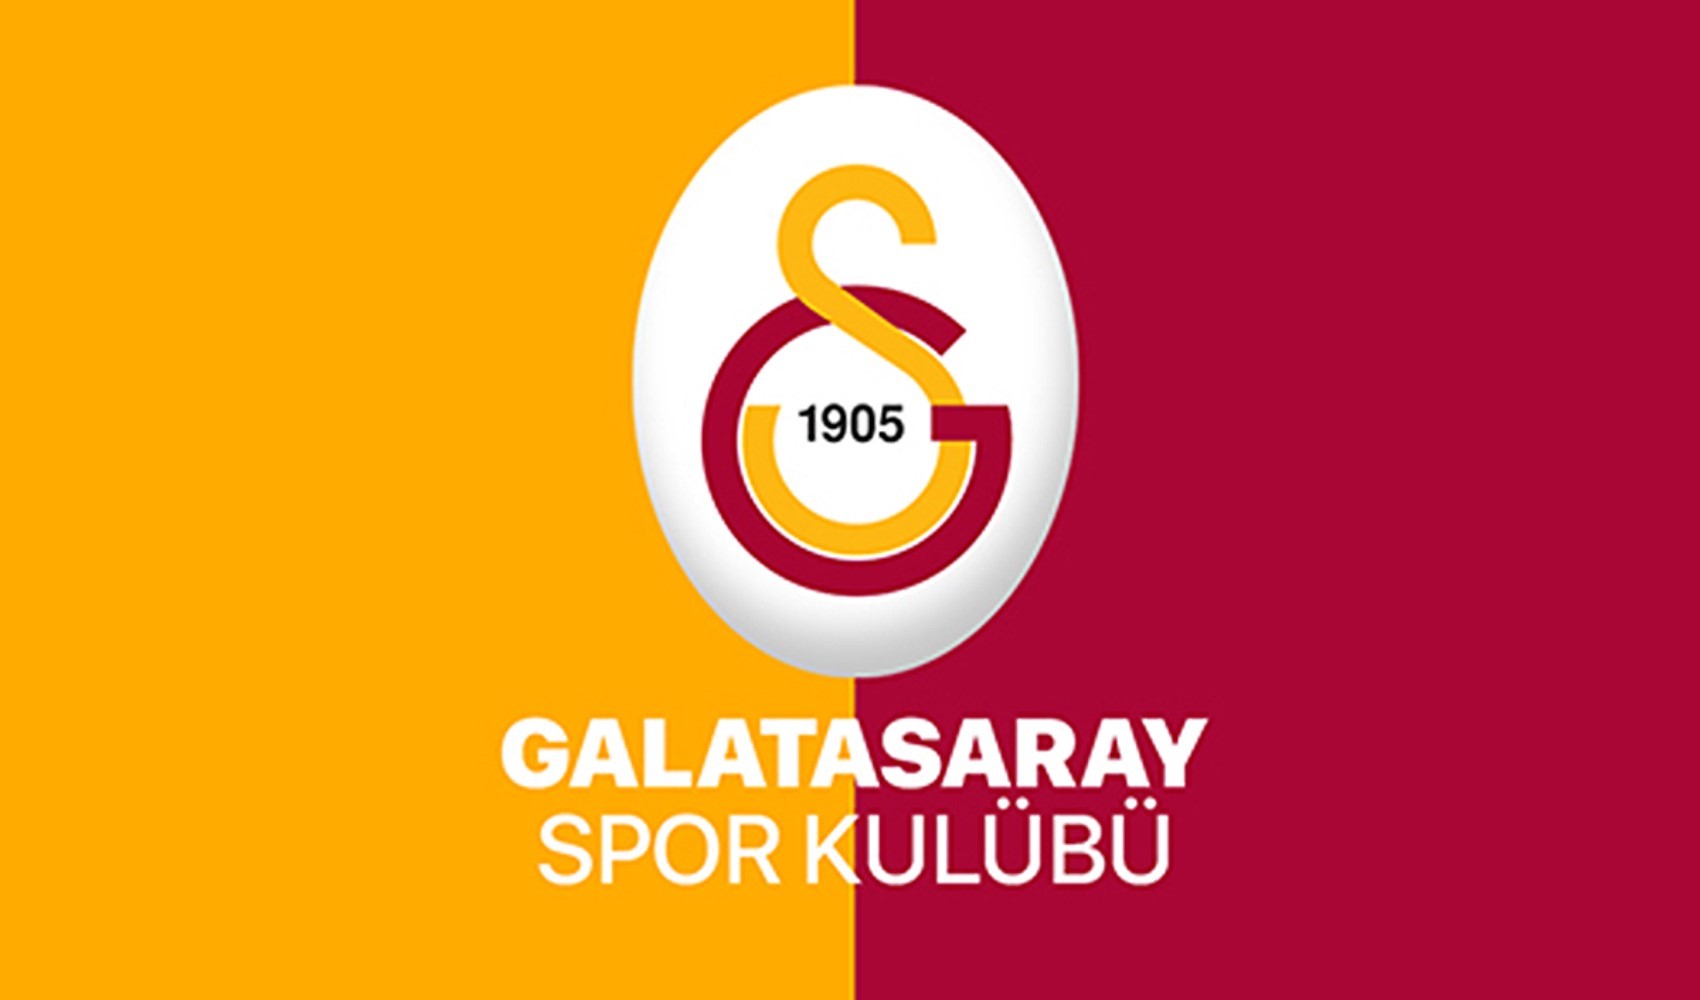 Galatasaray'dan paylaşım: 2 kupalı şampiyon!